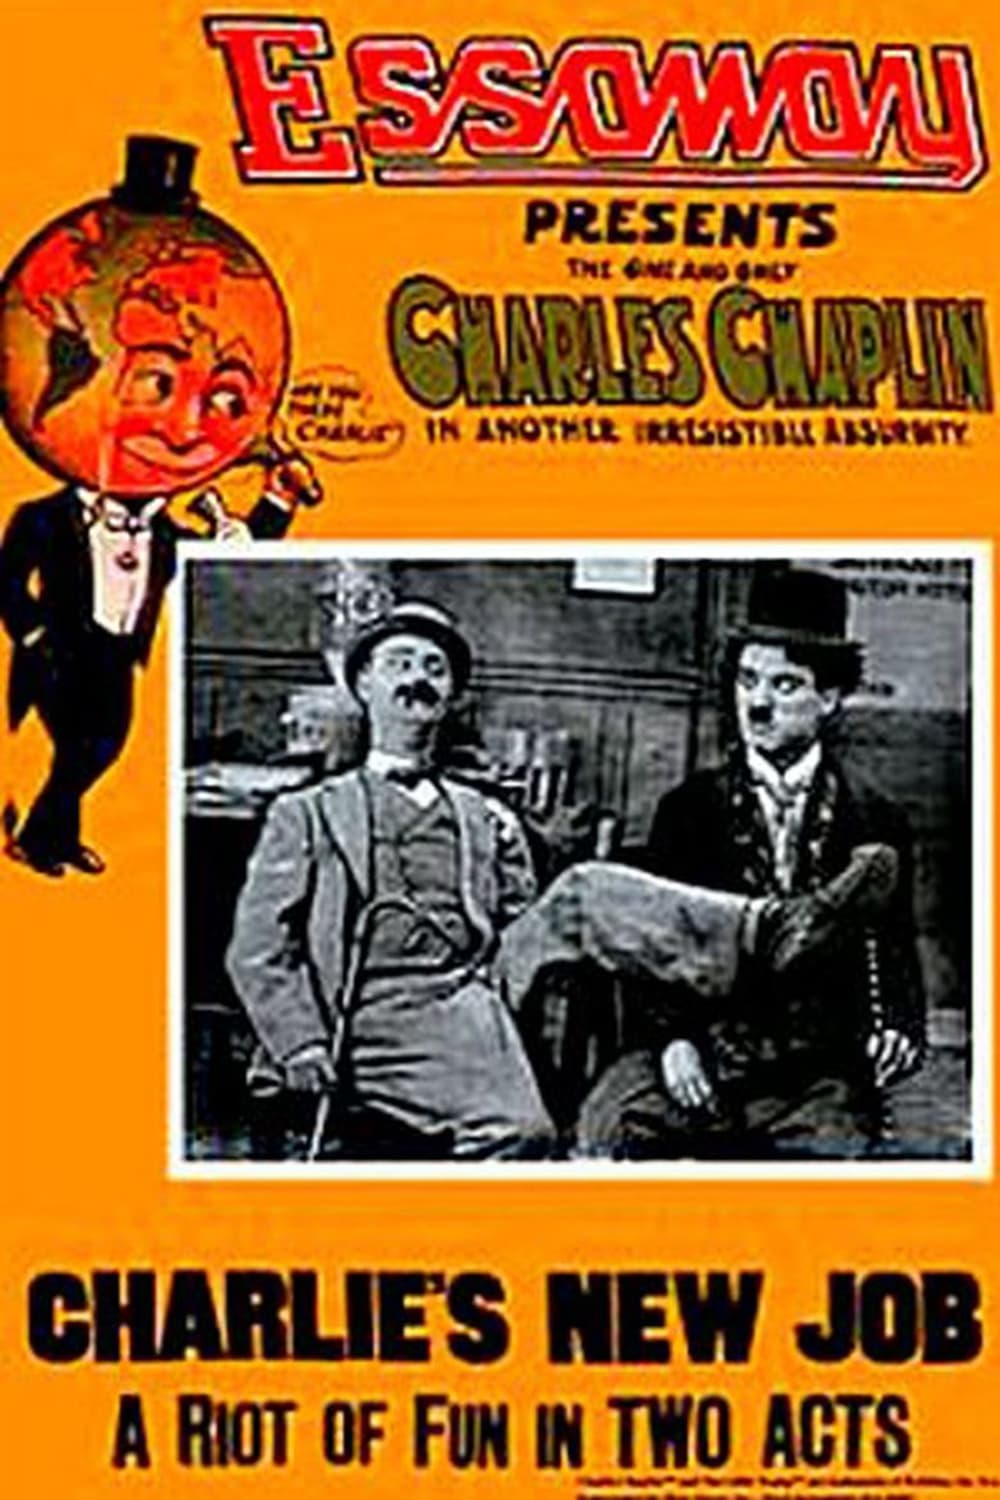 EN - His New Job (1915) CHARLIE CHAPLIN